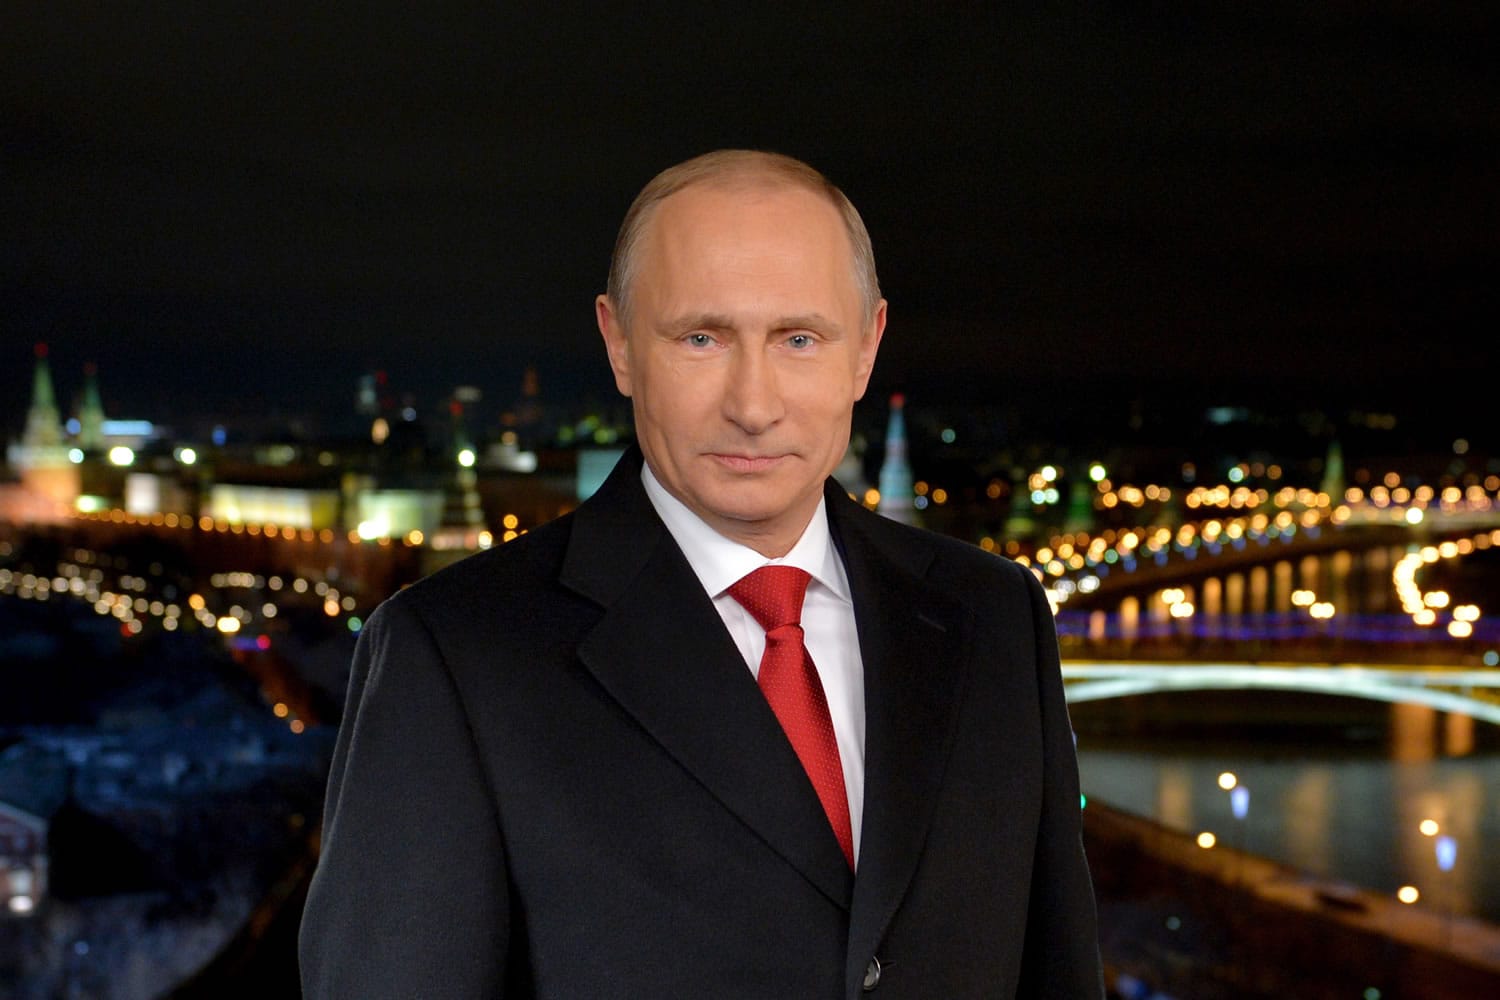 Vladimir Putin
Russian president